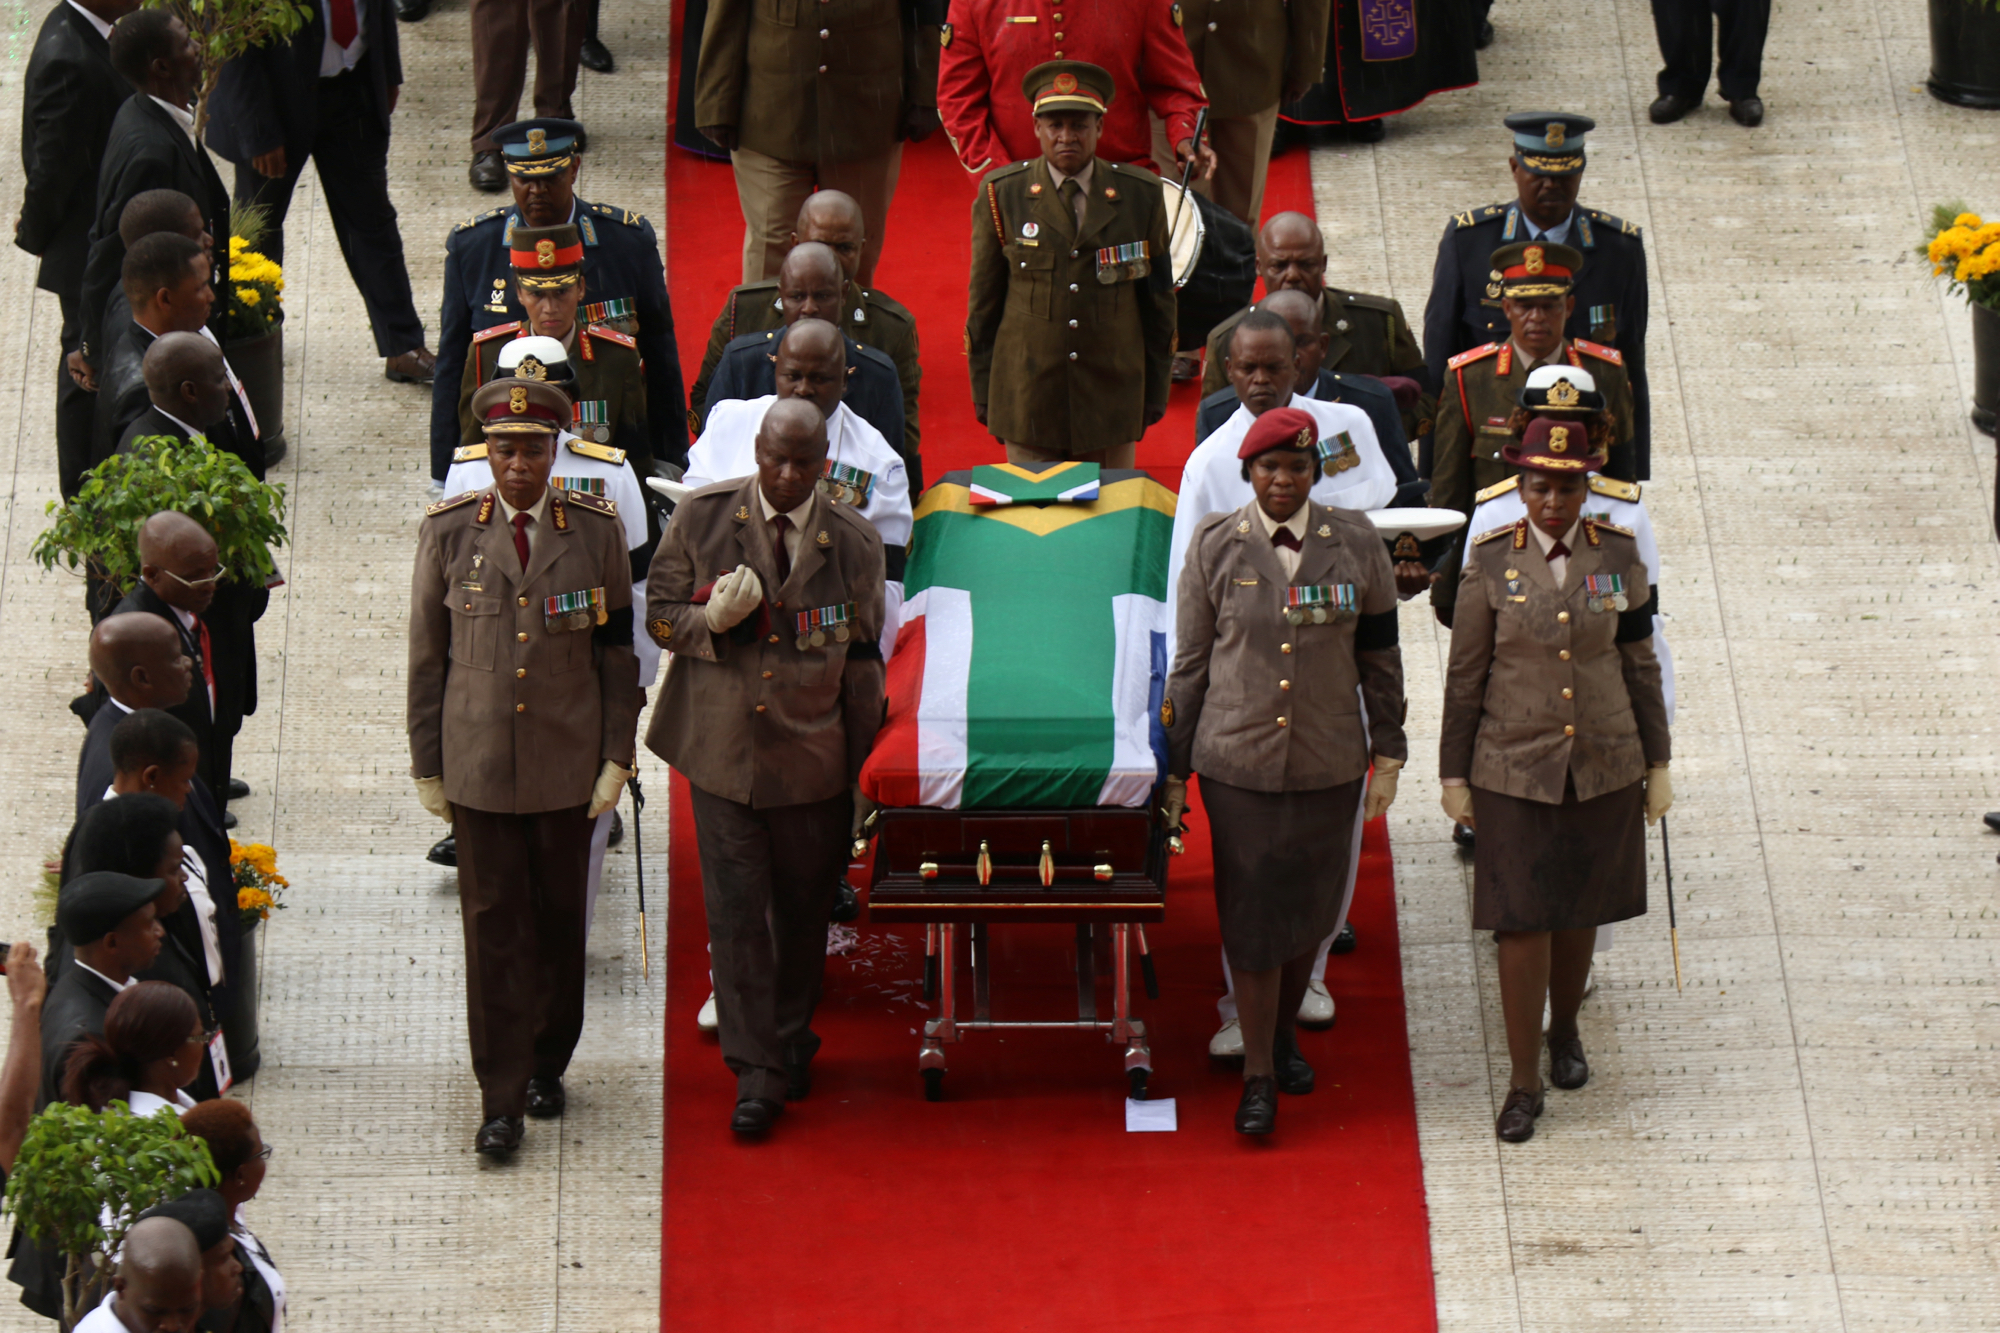 Catholic leaders: Winnie Mandela was a friend to South Africa's poor